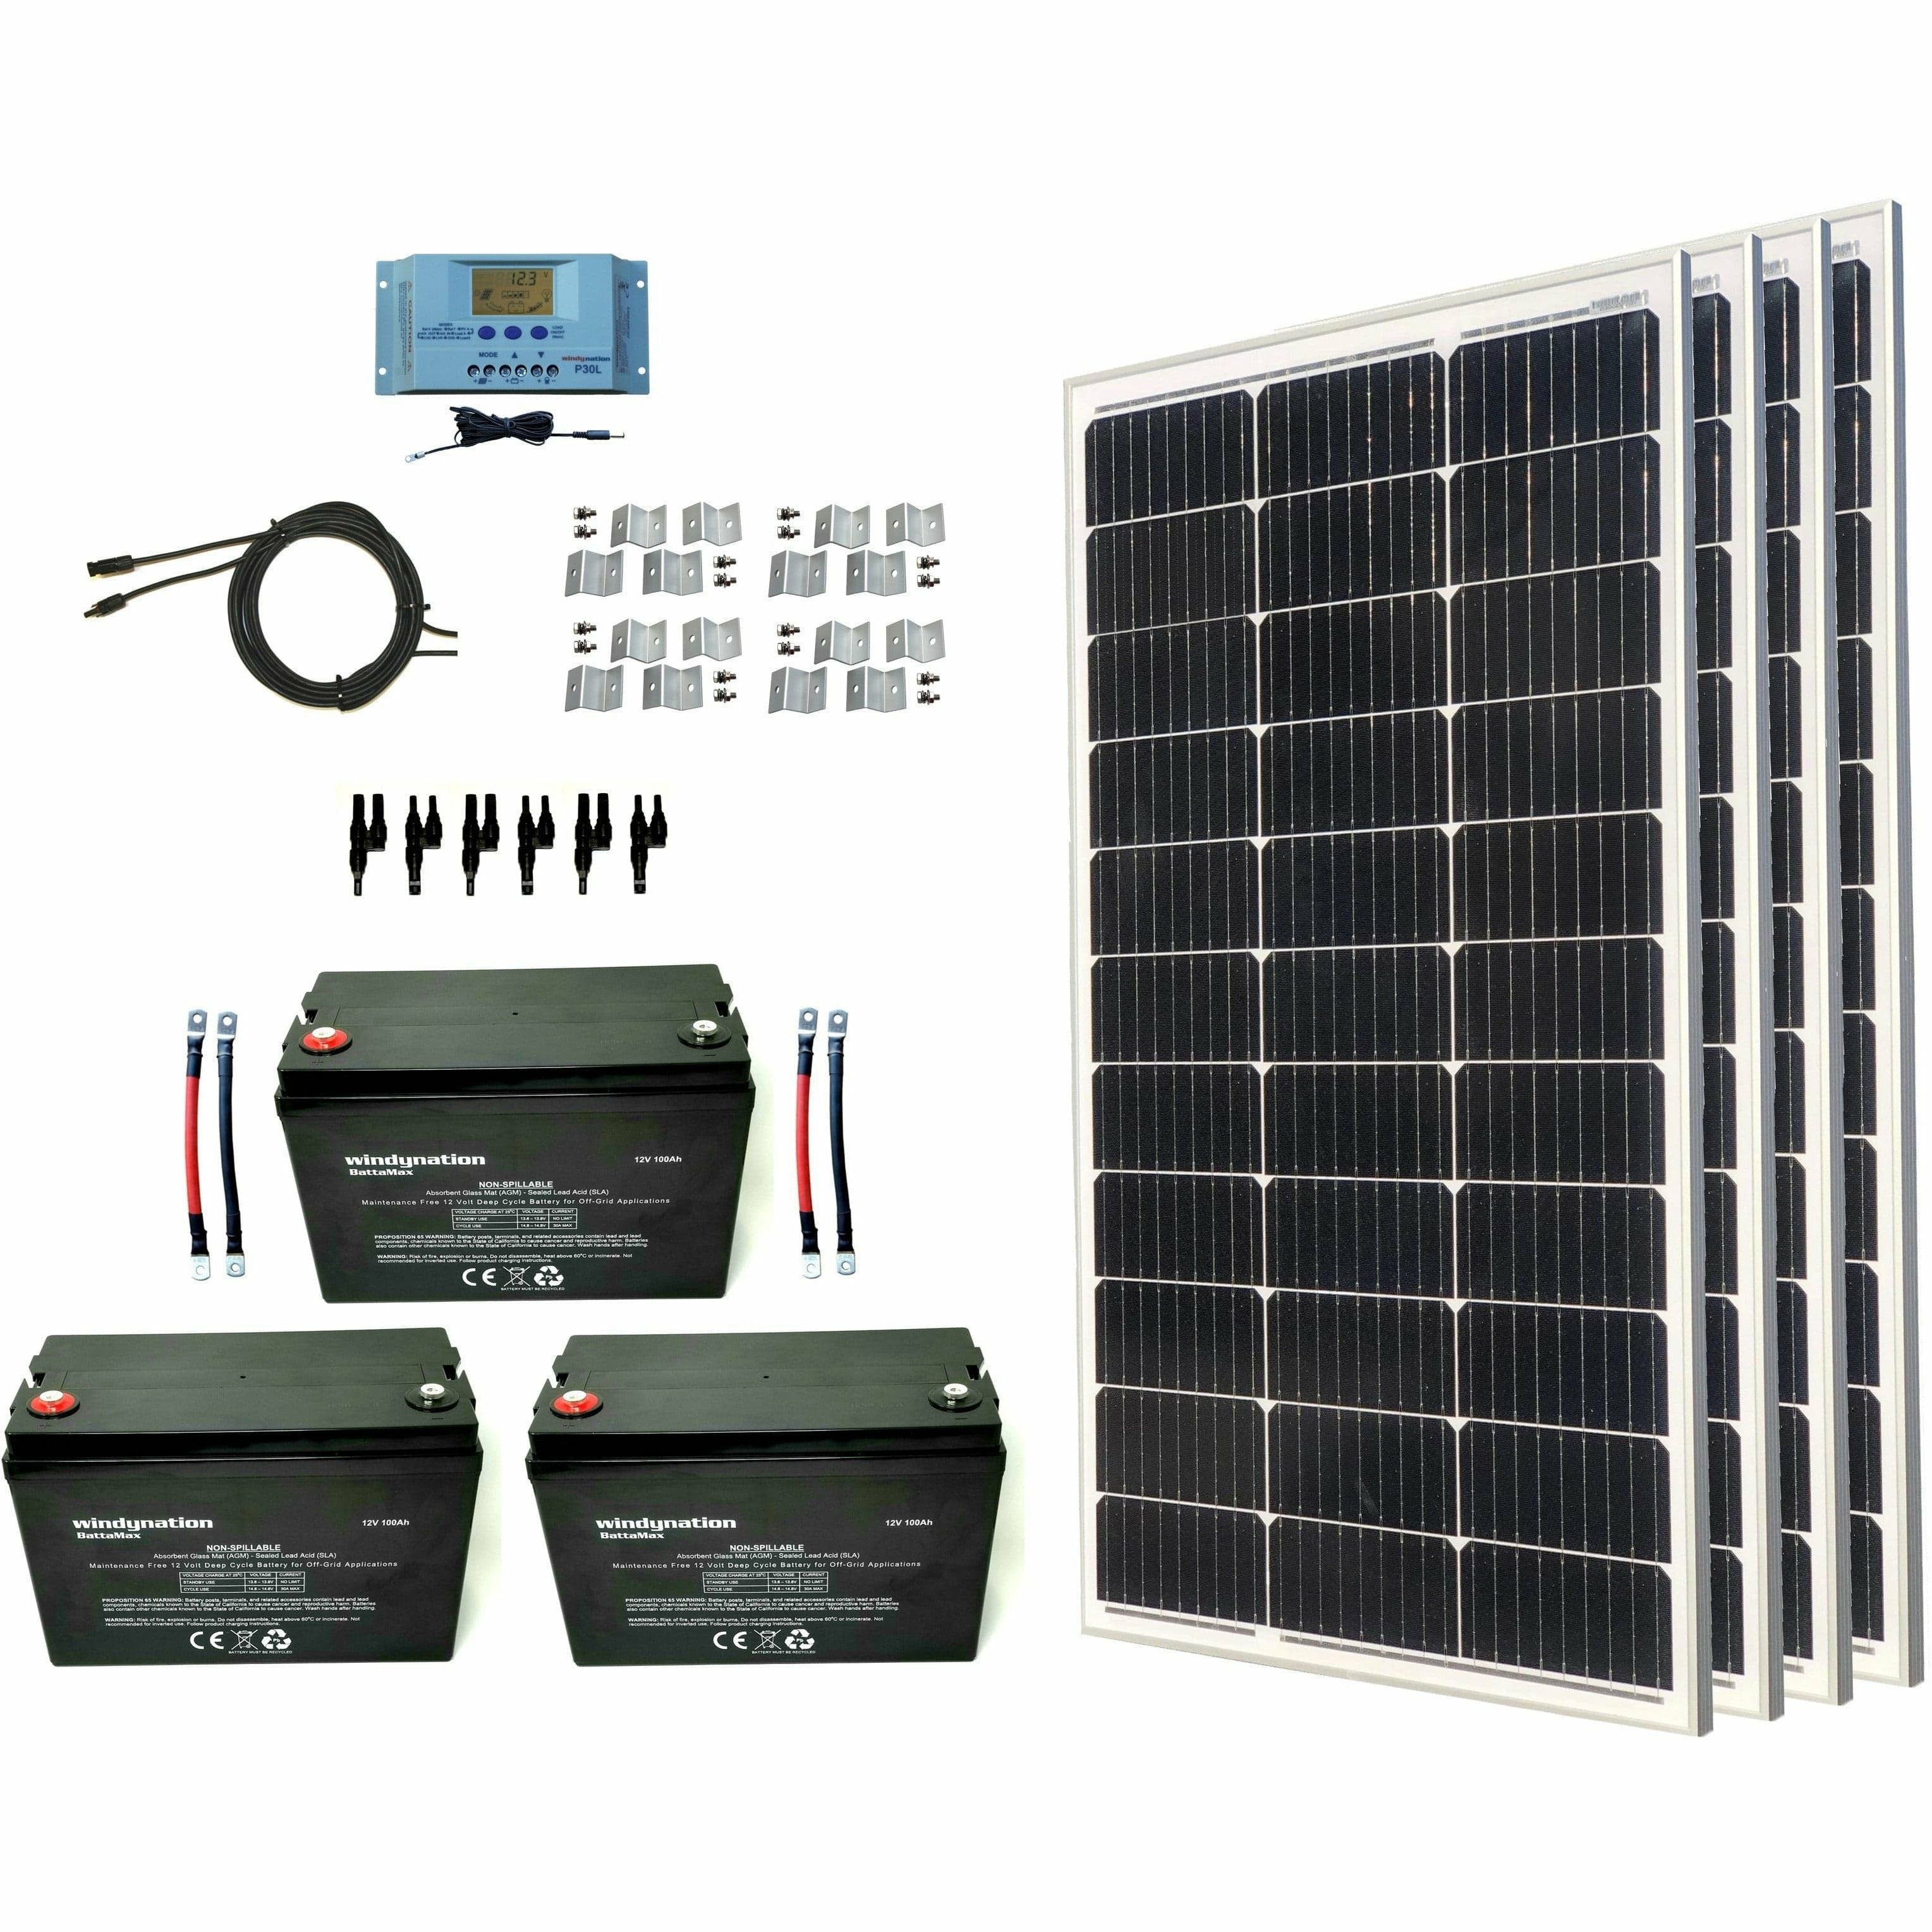 Windy Nation 3x 100Ah Battery + 4x 100W Monocrystalline Solar Panel Kit